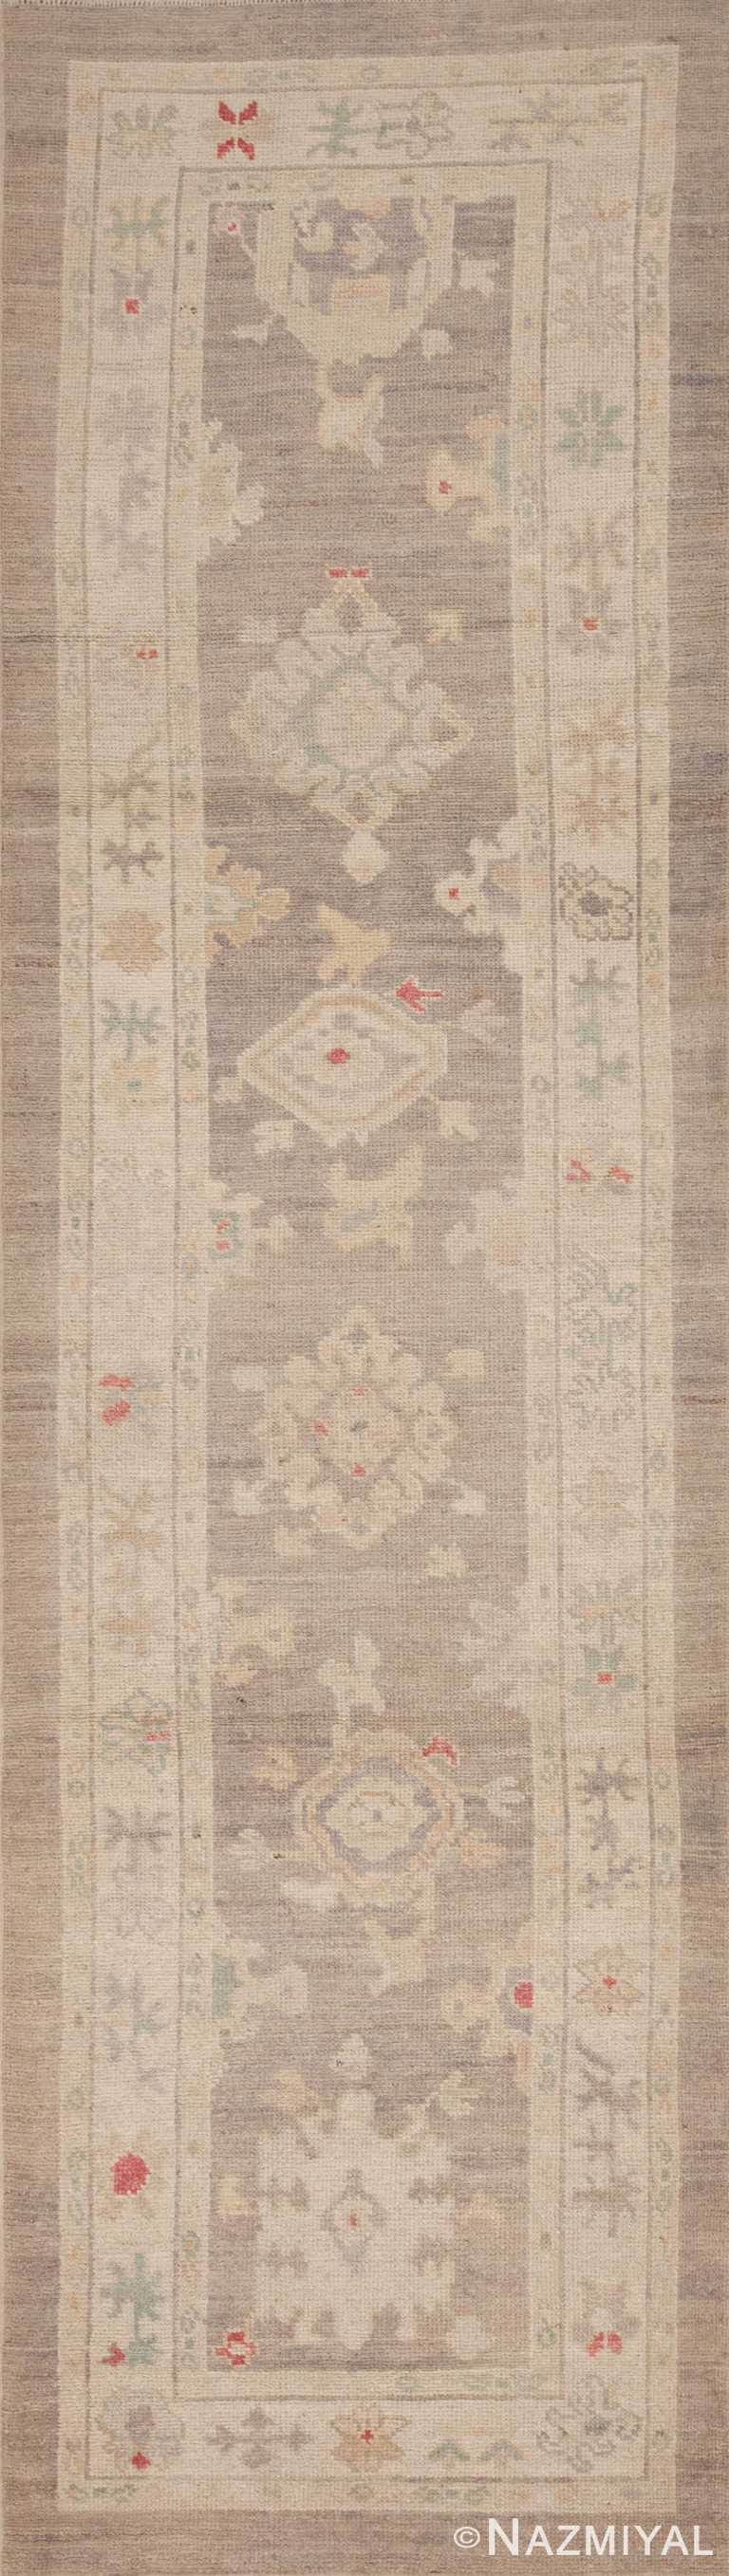 Soft Light Gray Pastel Color Tribal Geometric Turkish Oushak Design Modern Hallway Runner Rug 11202 by Nazmiyal Antique Rugs